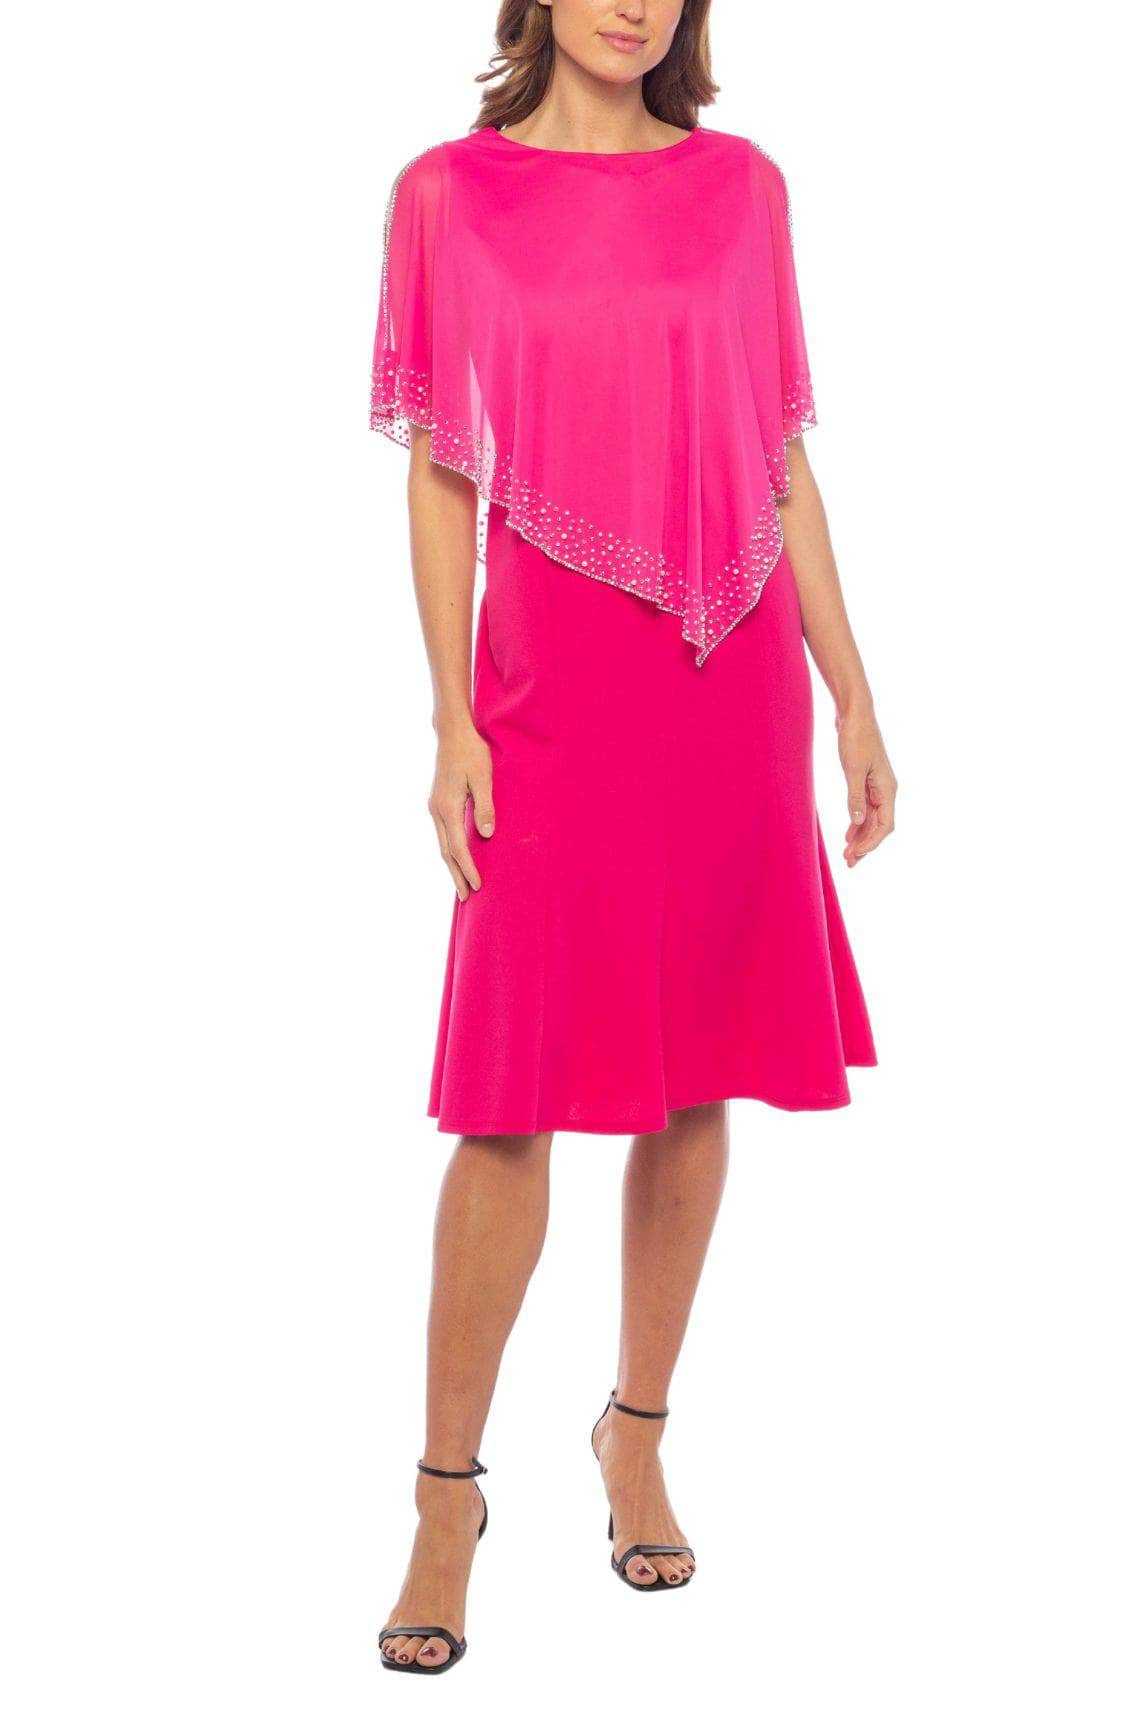 Image of Marina 268534 - Chiffon Sequin Dress